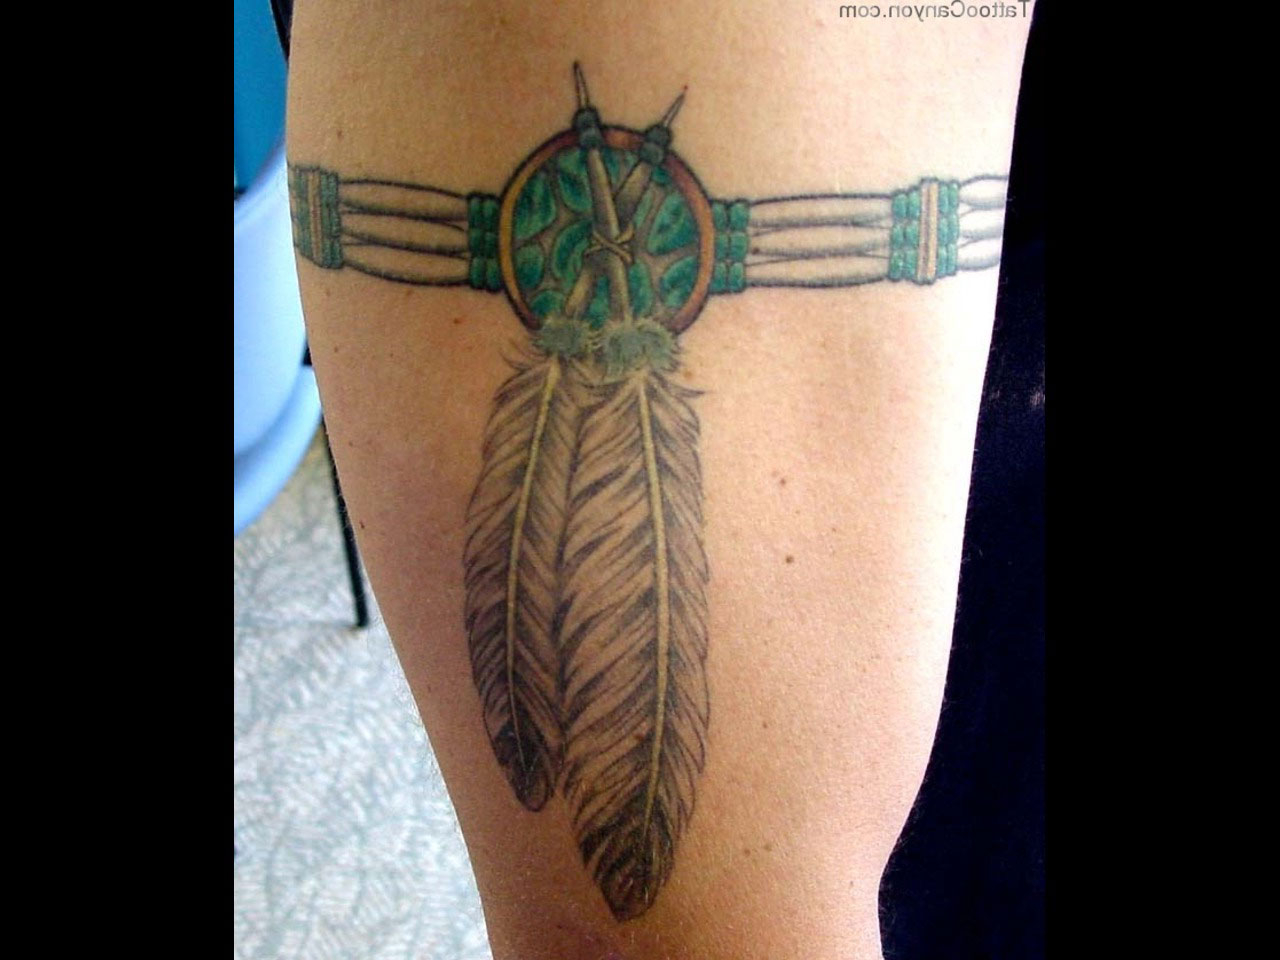 Indian armband tattoo